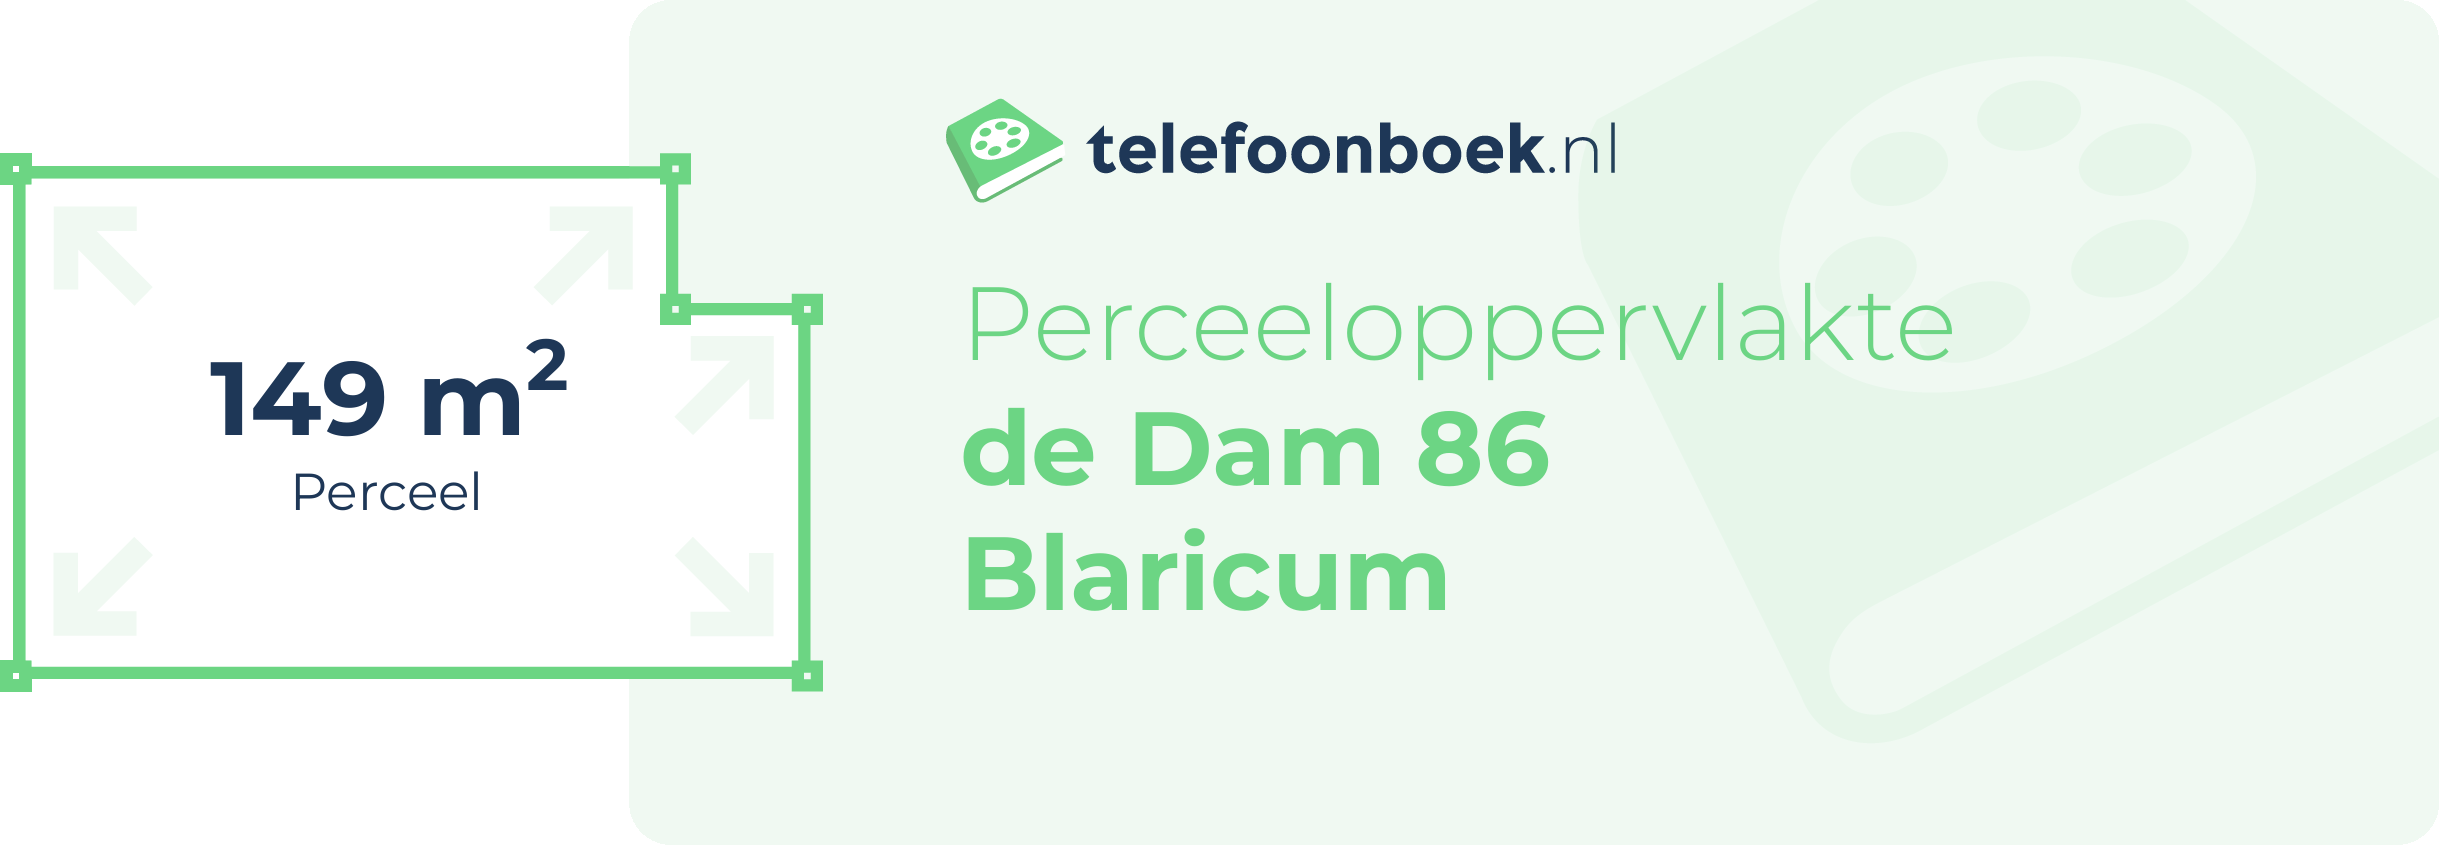 Perceeloppervlakte De Dam 86 Blaricum